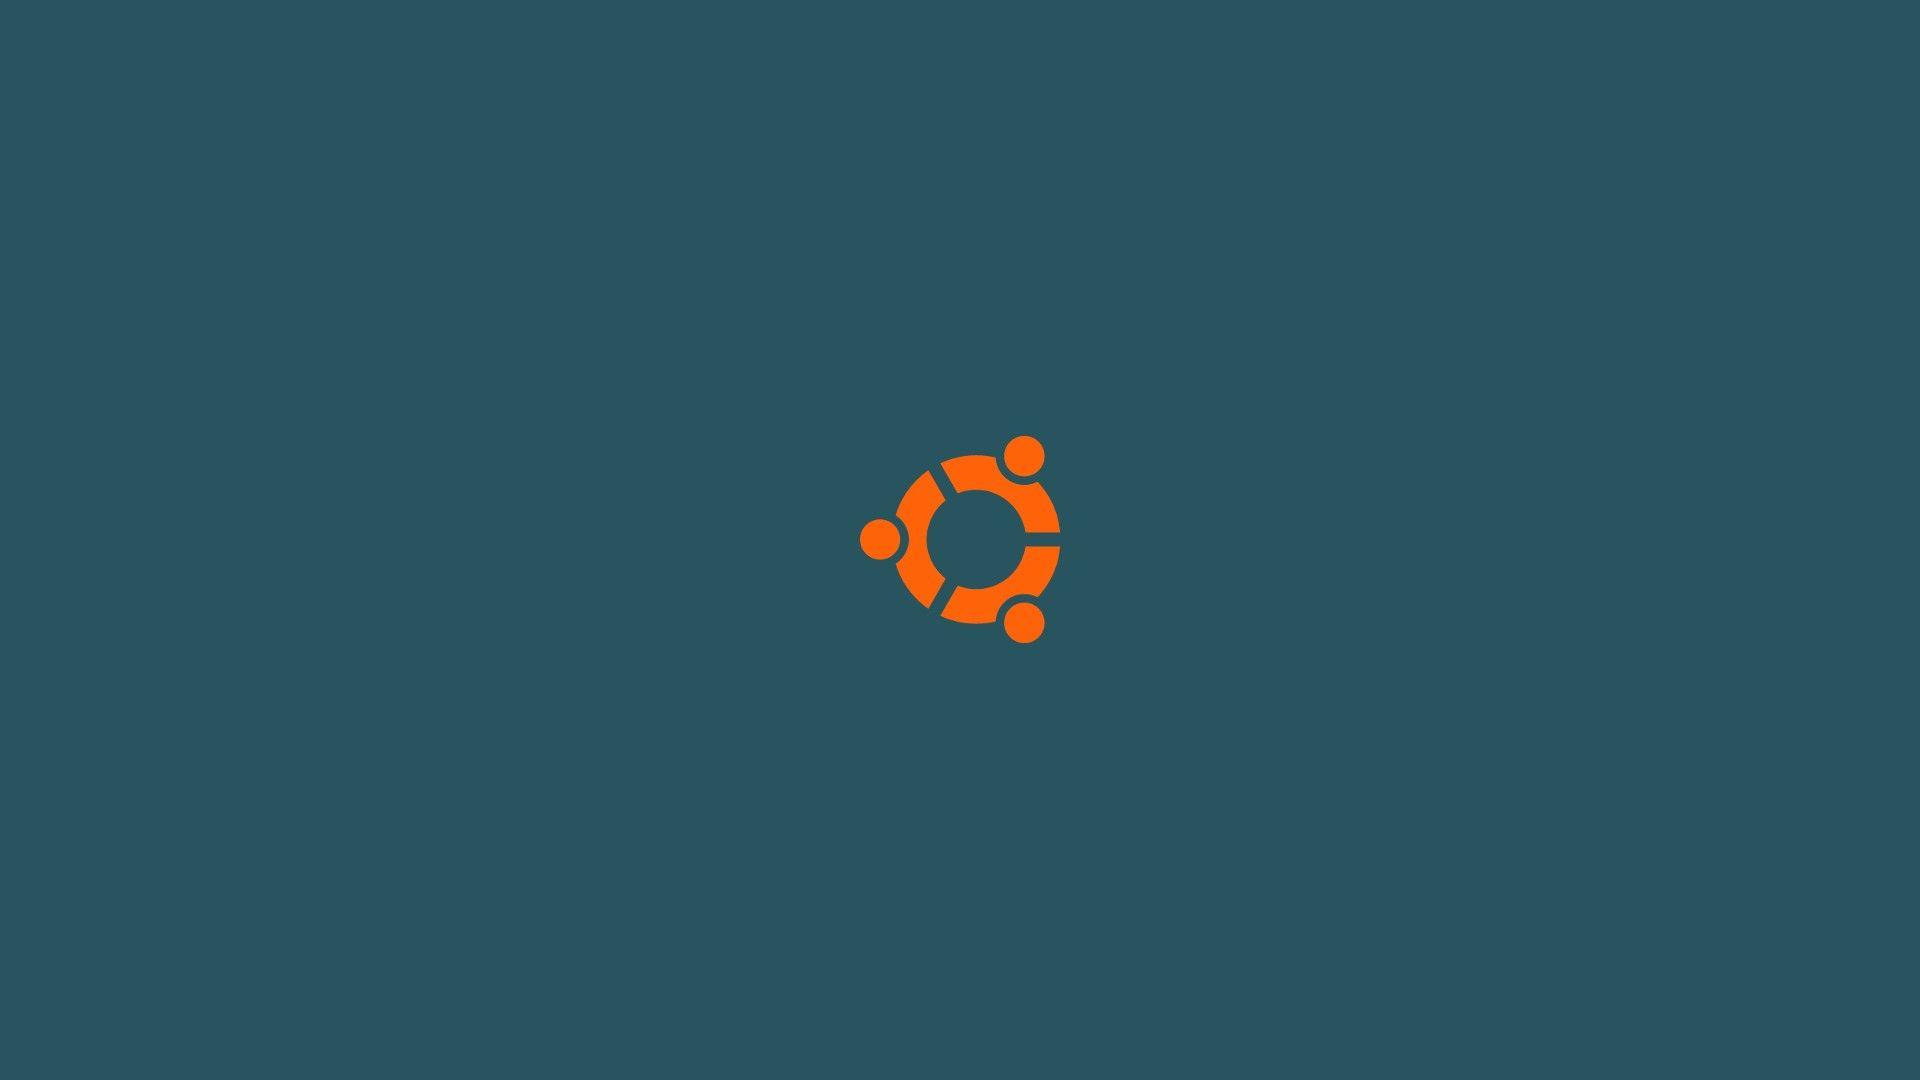 Linux ubuntu logos simple background wallpaper